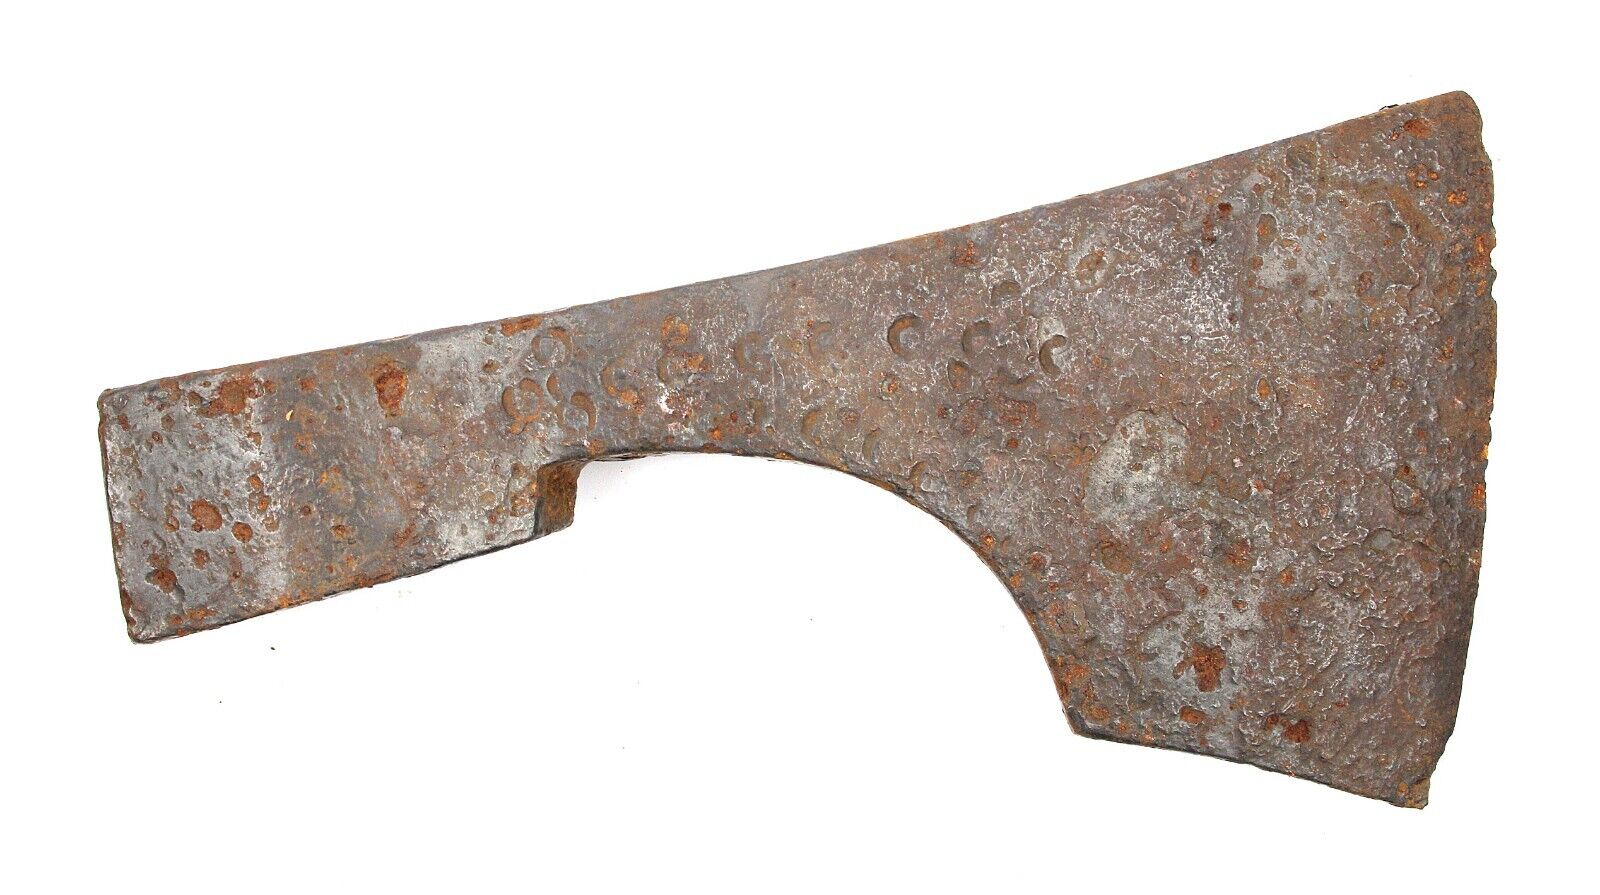 Ancient Rare Authentic Viking Kievan Rus Medieval Iron Battle Axe 10-12th AD